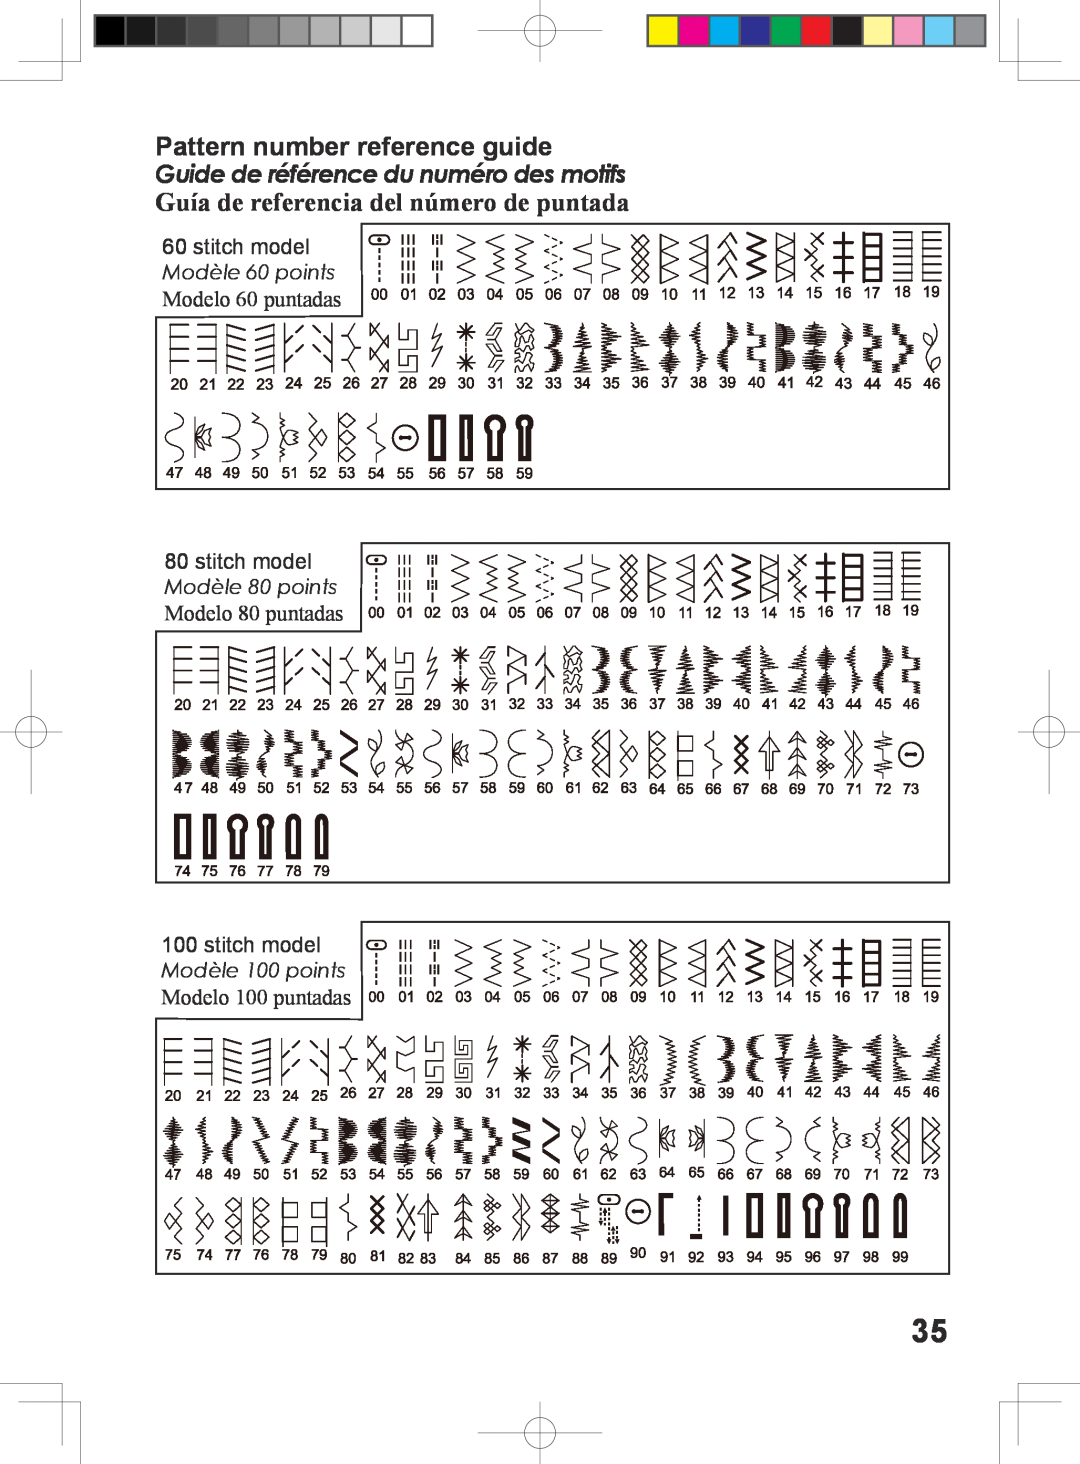 Singer 6160, 6180 Pattern number reference guide, Guía de referencia del número de puntada, stitch model, Modèle 60 points 